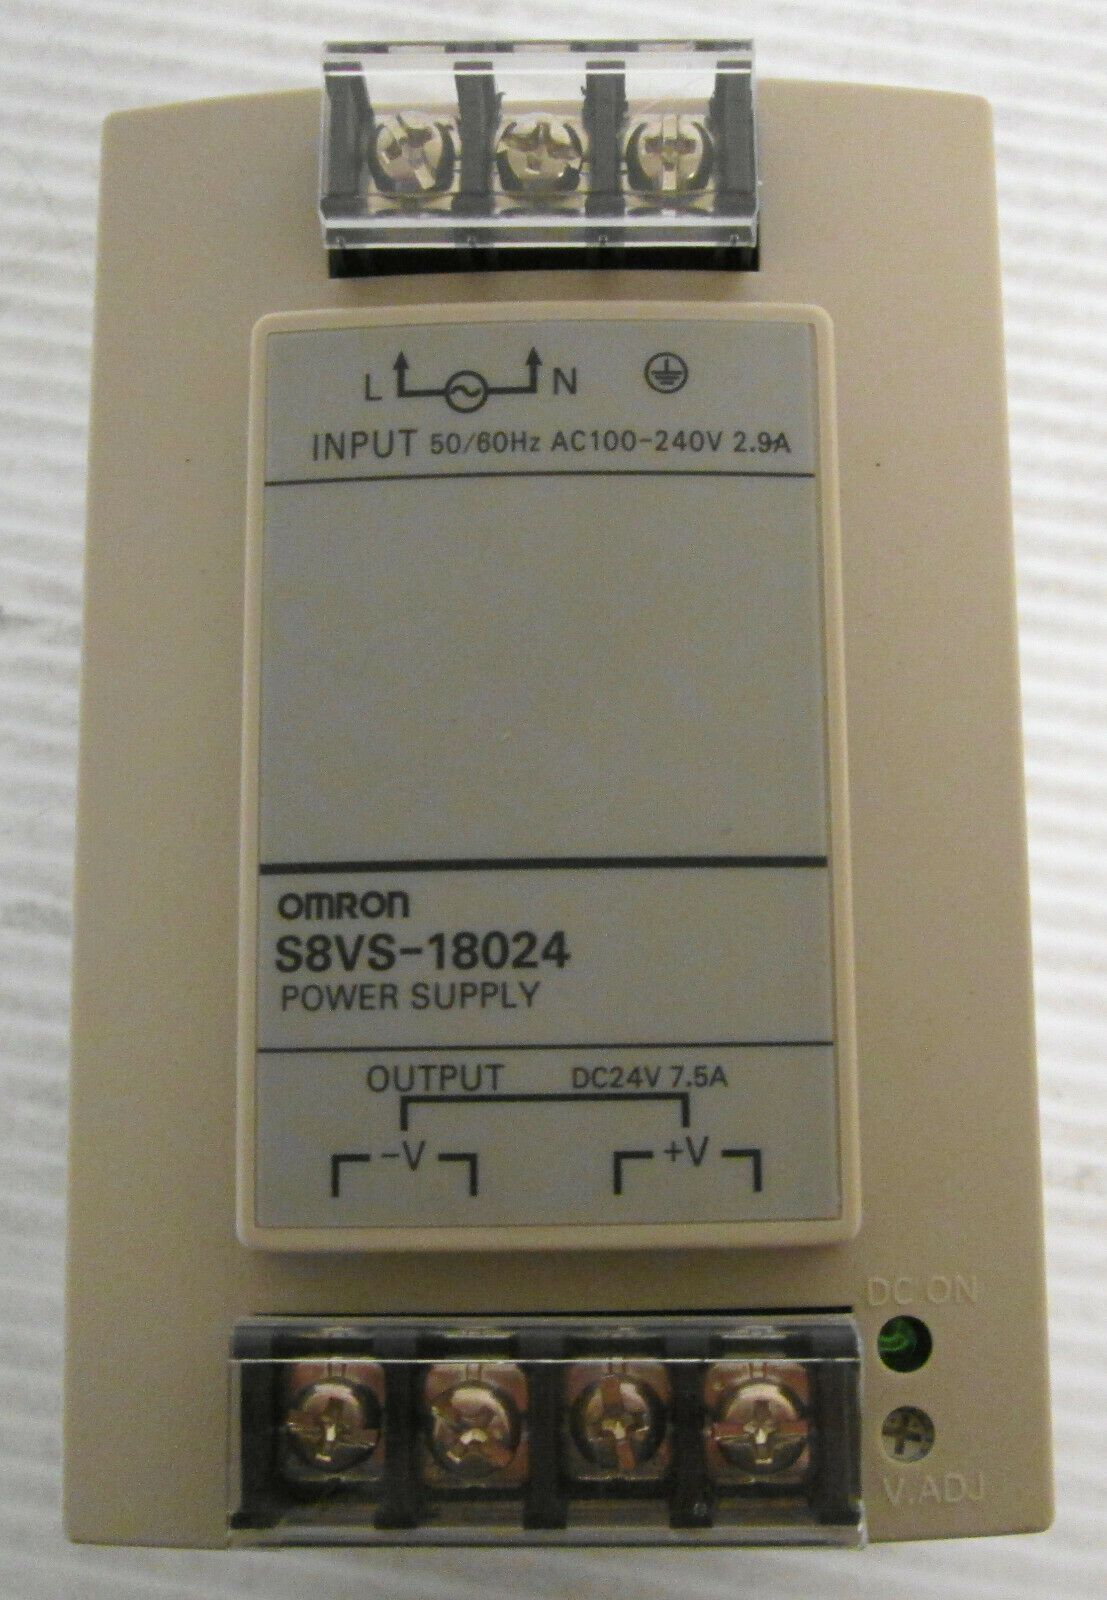 S8VS-18024